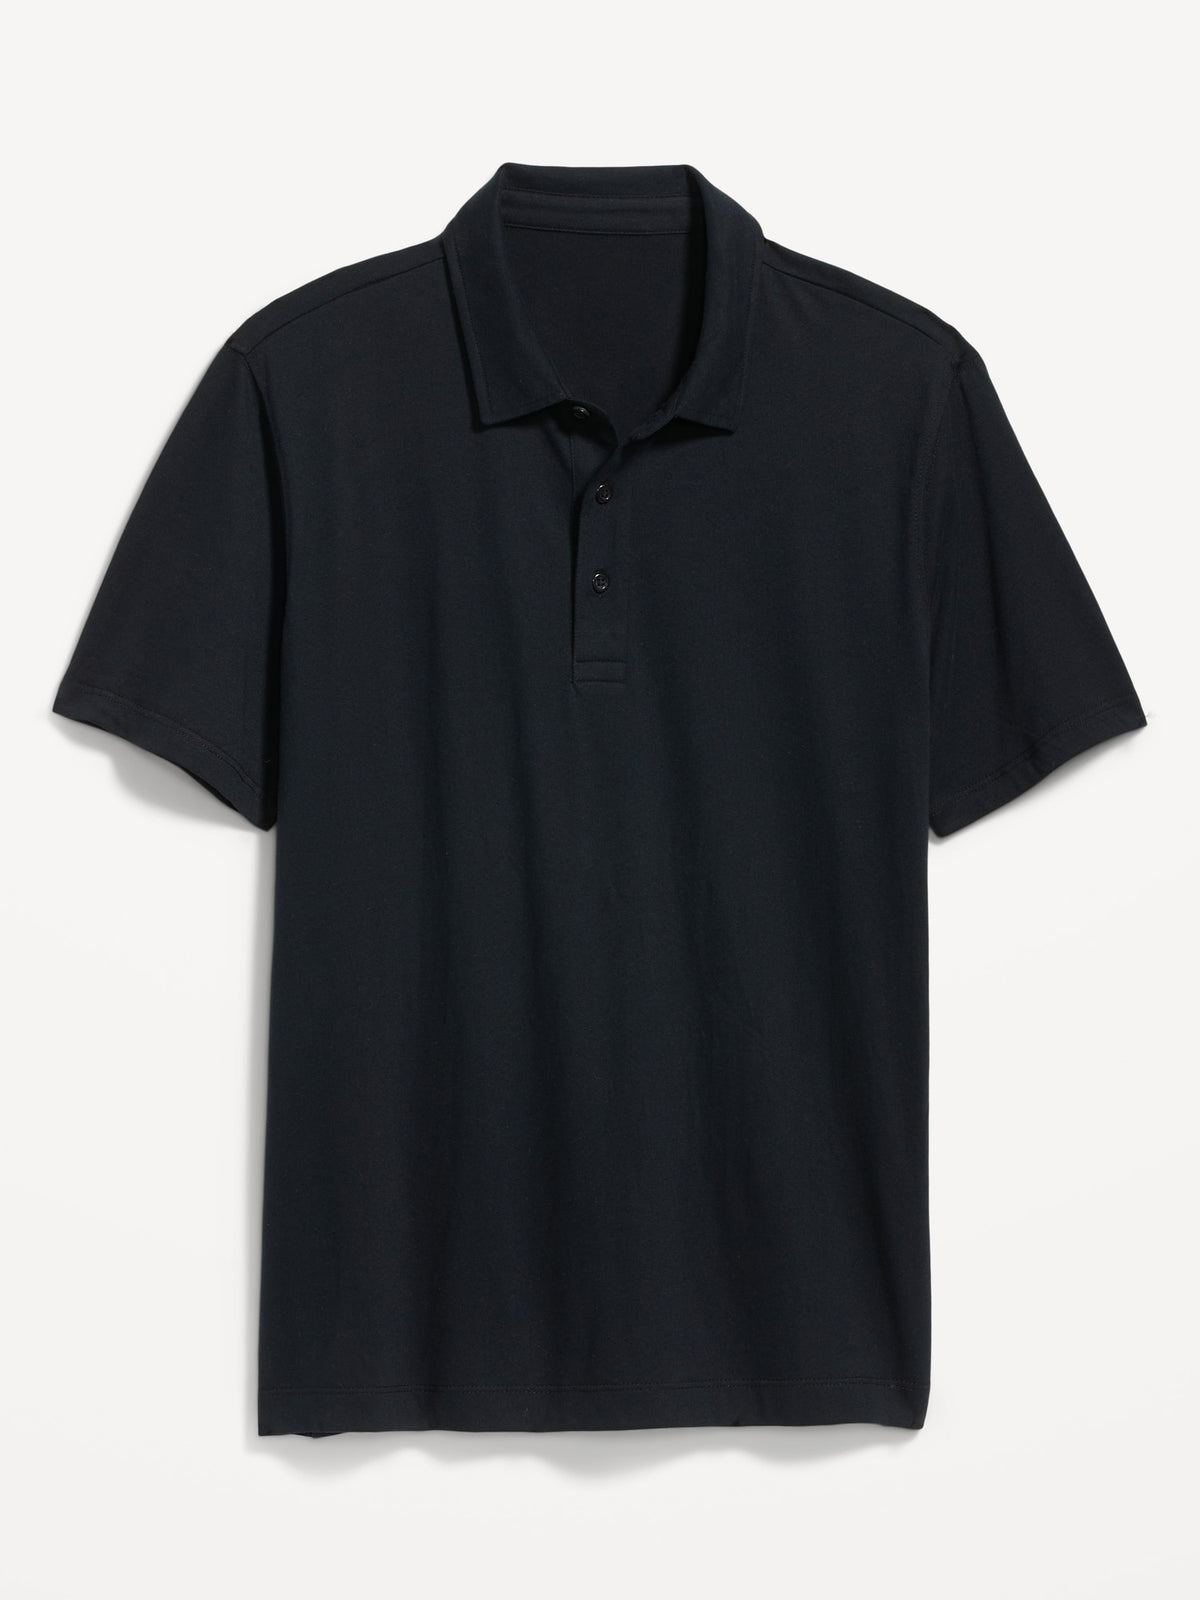 Men's black polo shirt